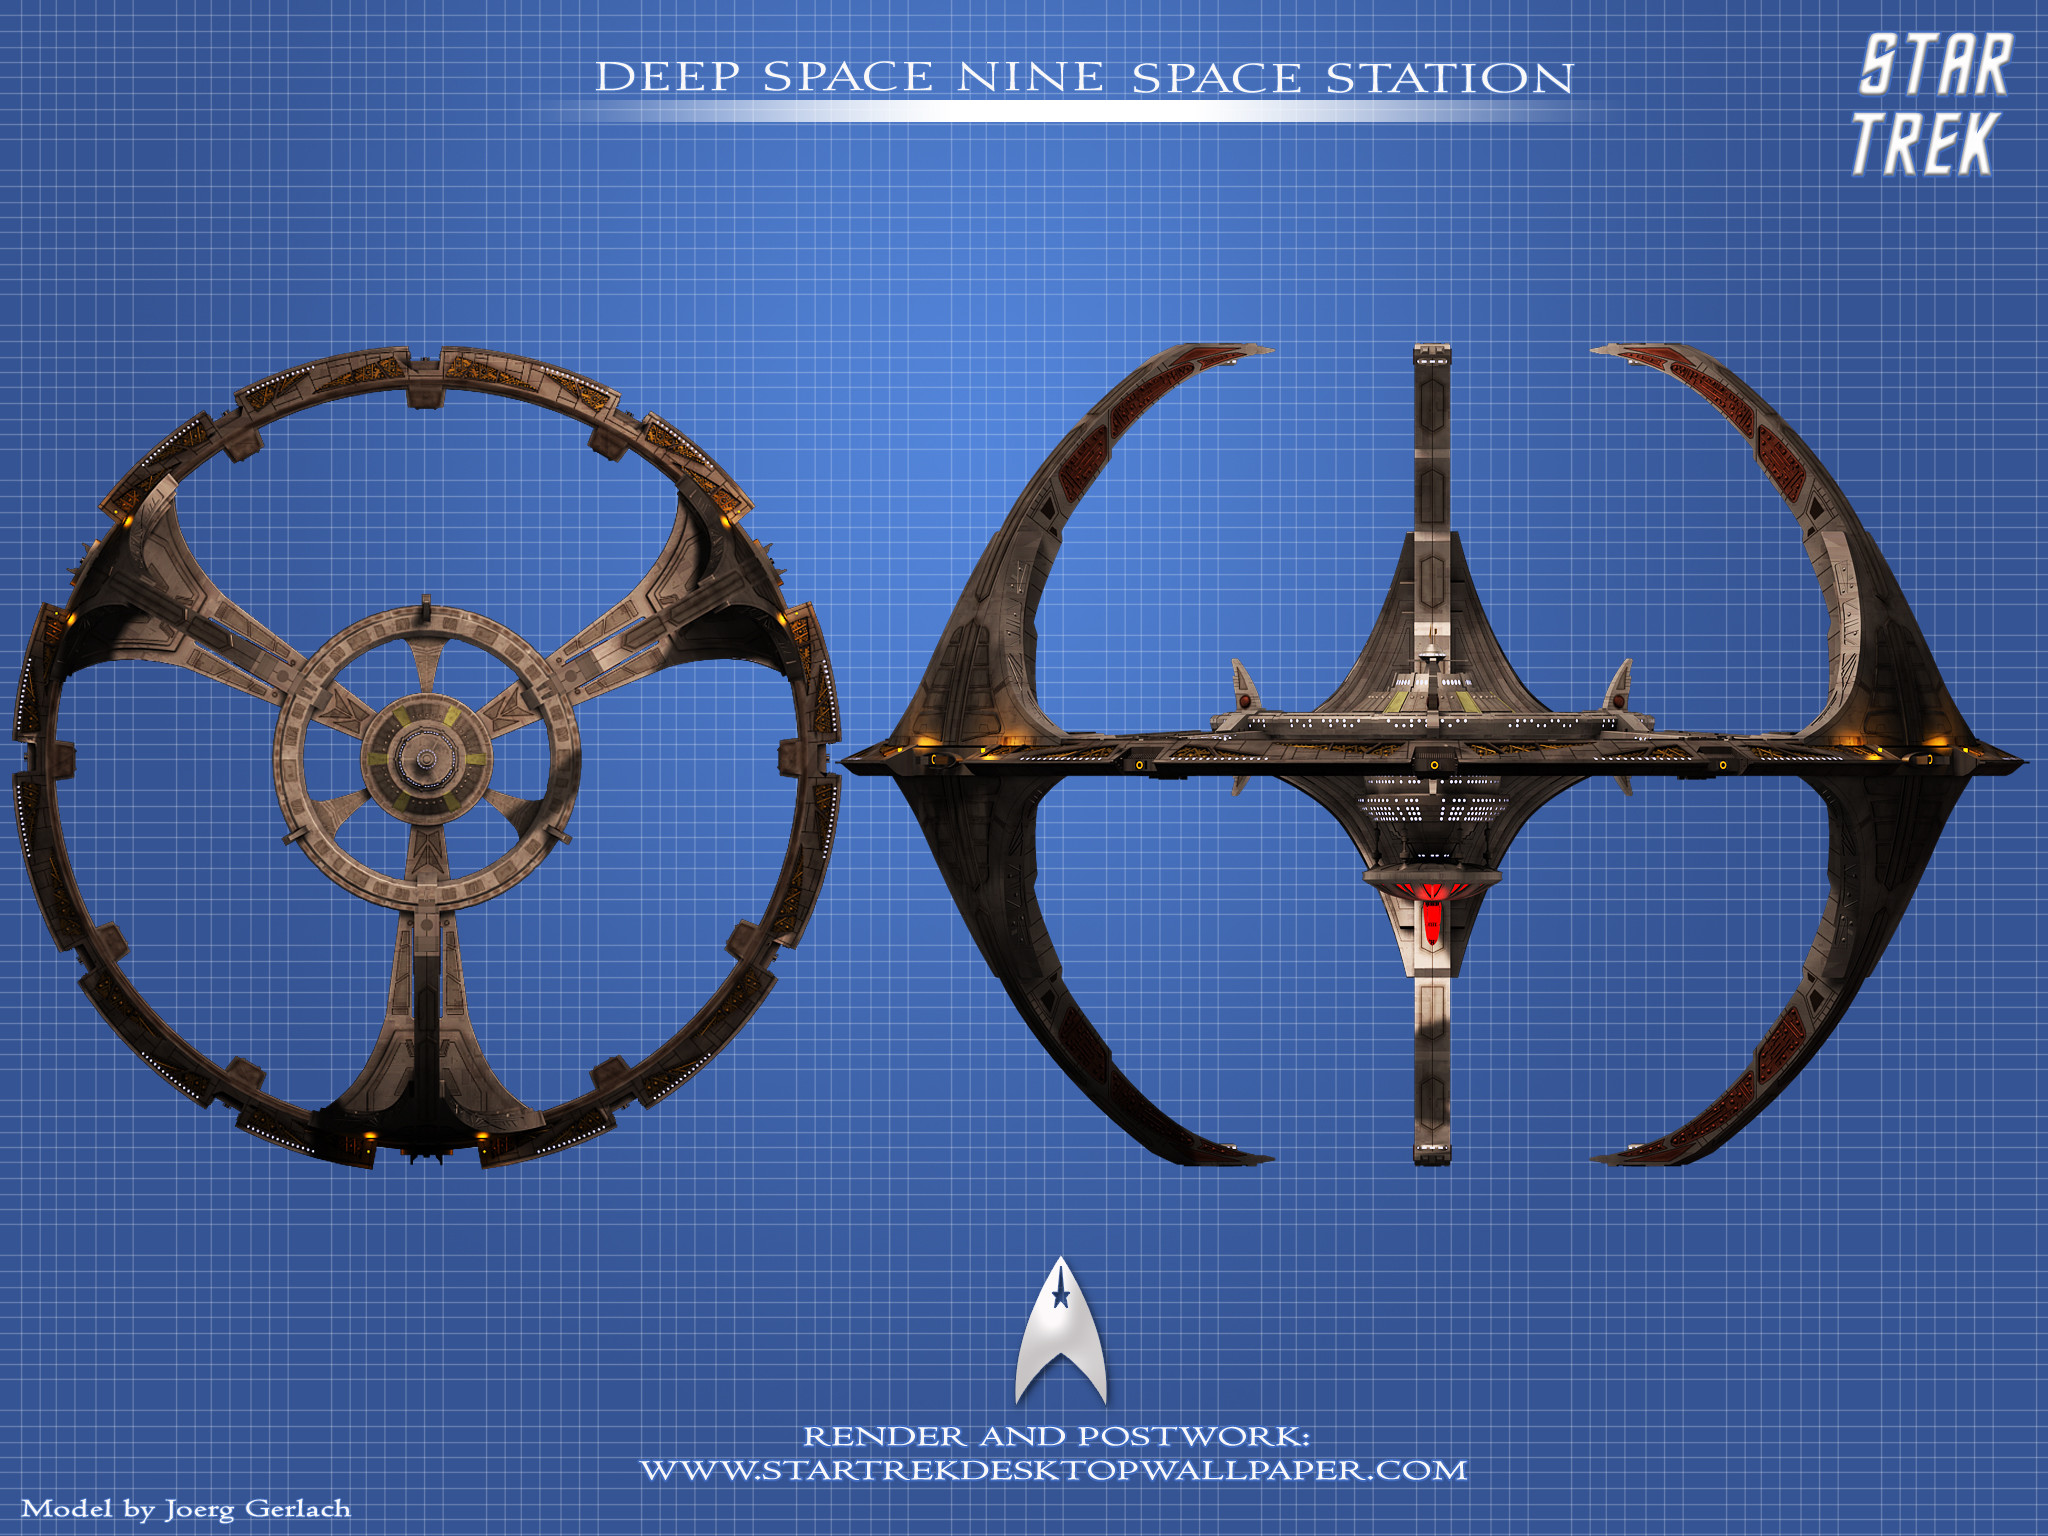 2048x1536 Star Trek Deep Space Nine Space Station. Free Star Trek computer desktop  wallpaper, images